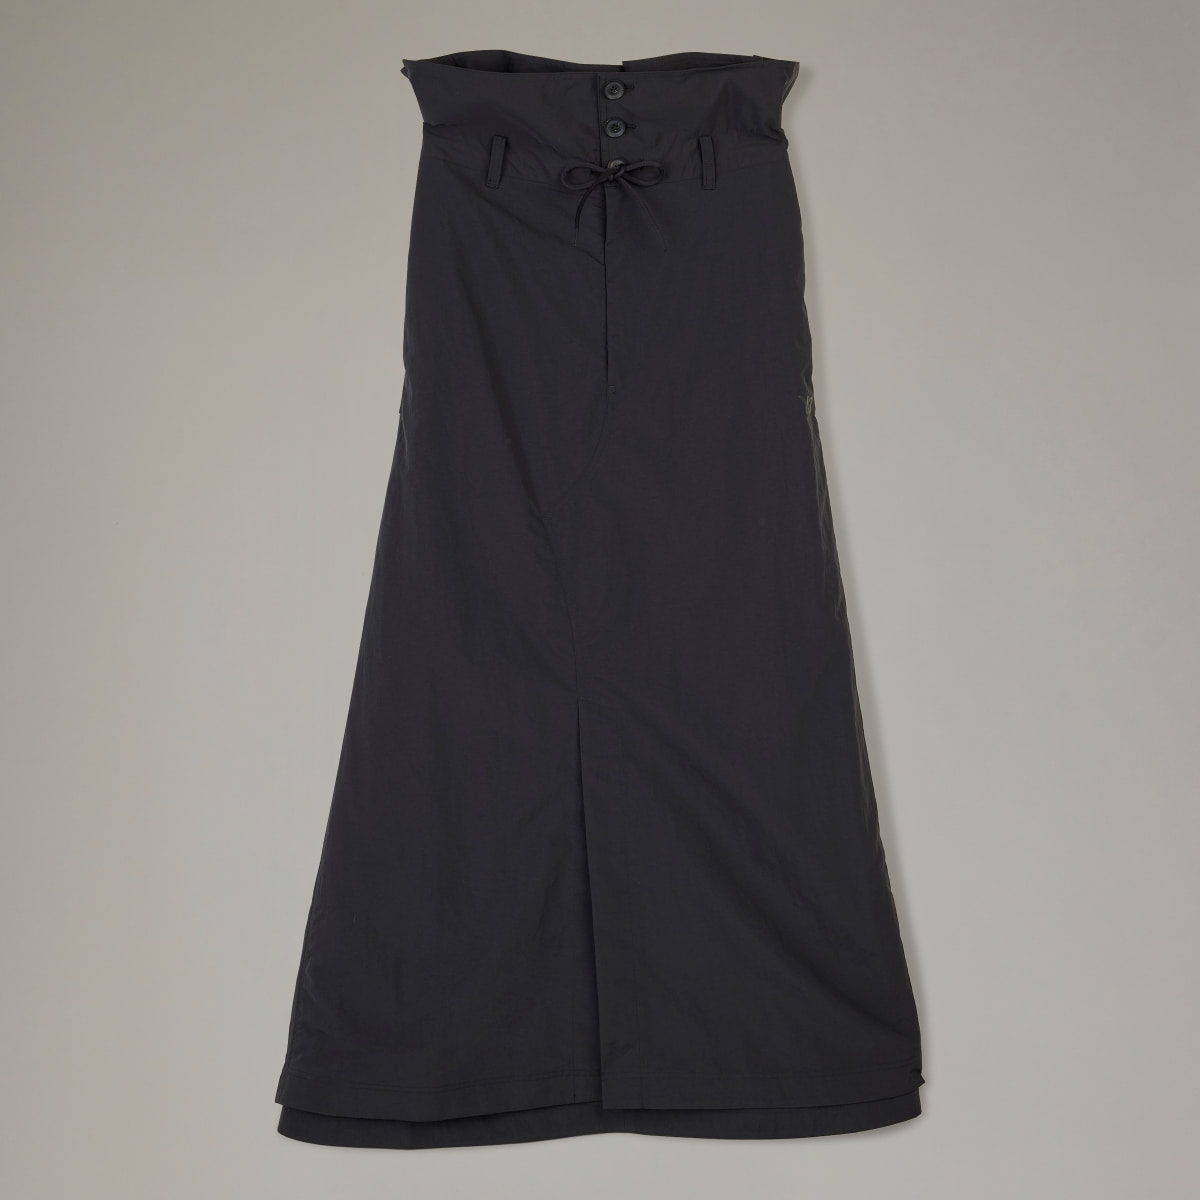 Adidas Y-3 Crinkle Nylon Skirt. 5